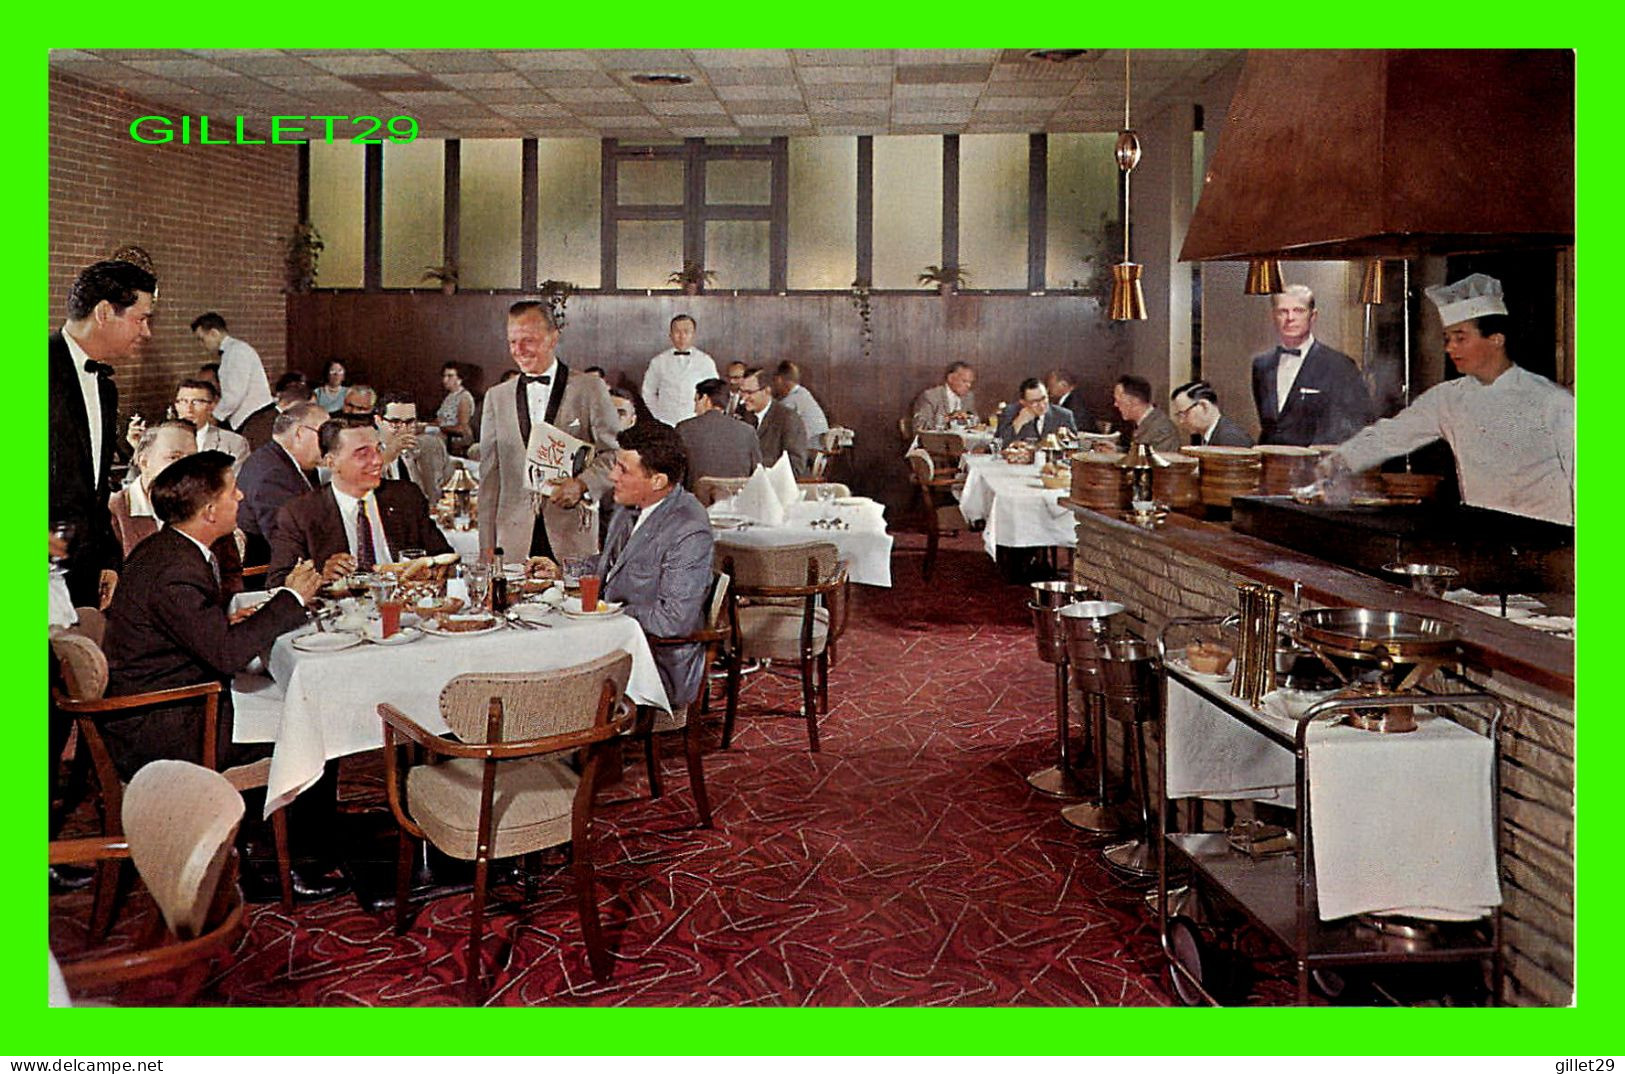 OTTAWA, ONTARIO - RIVERSIDE HOTEL - DINNING ROOM - ANIMATED WITH PEOPLES - W. SCHERMER - - Ottawa